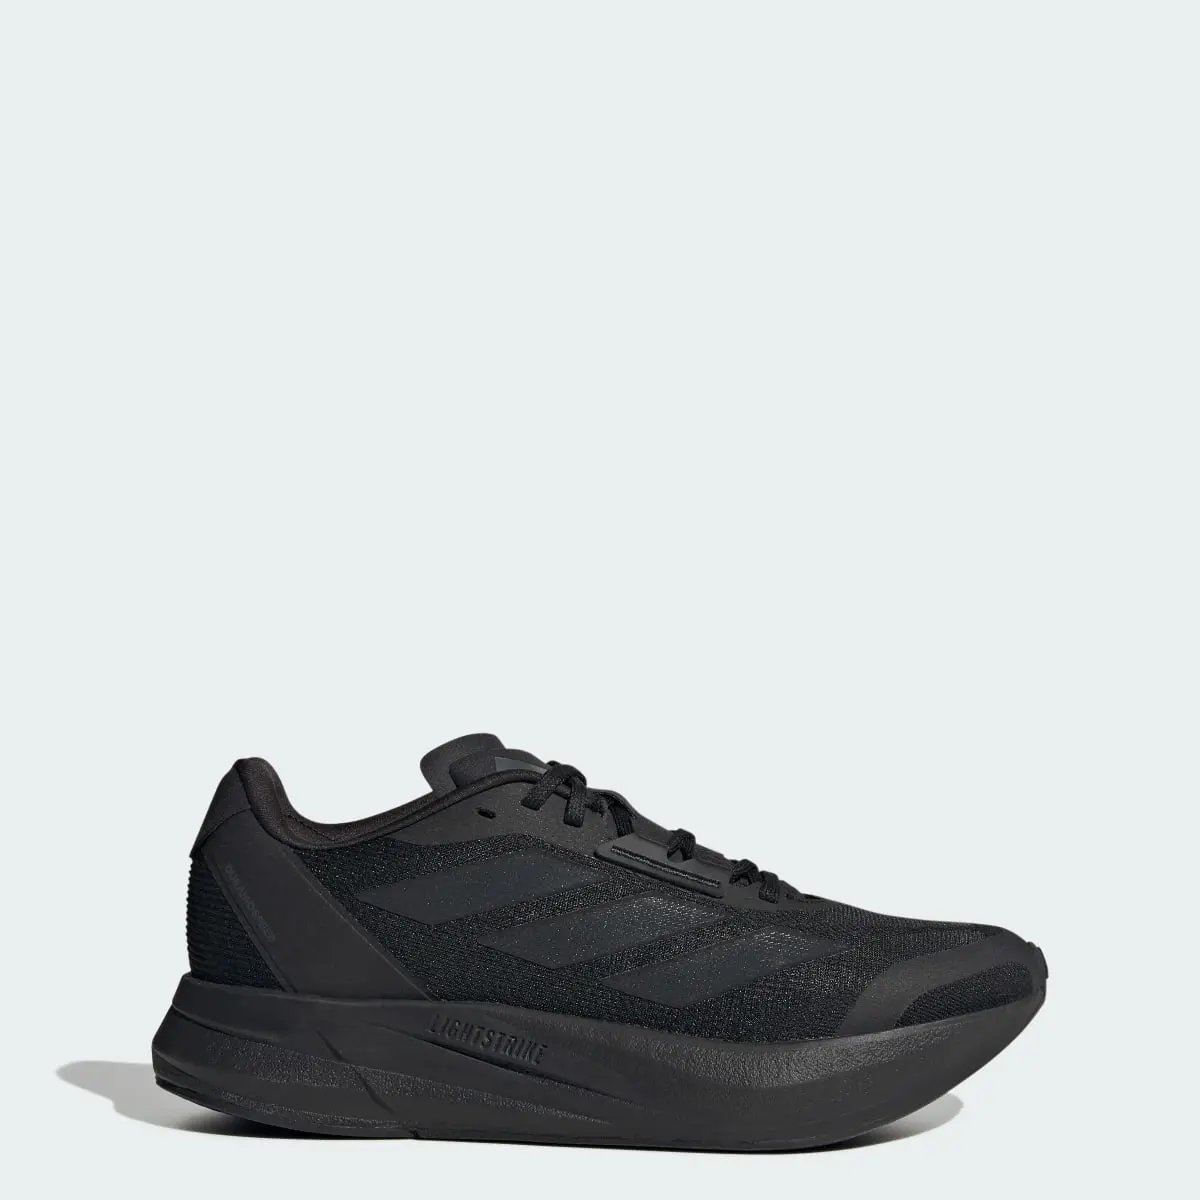 Adidas Duramo Speed Shoes. 1